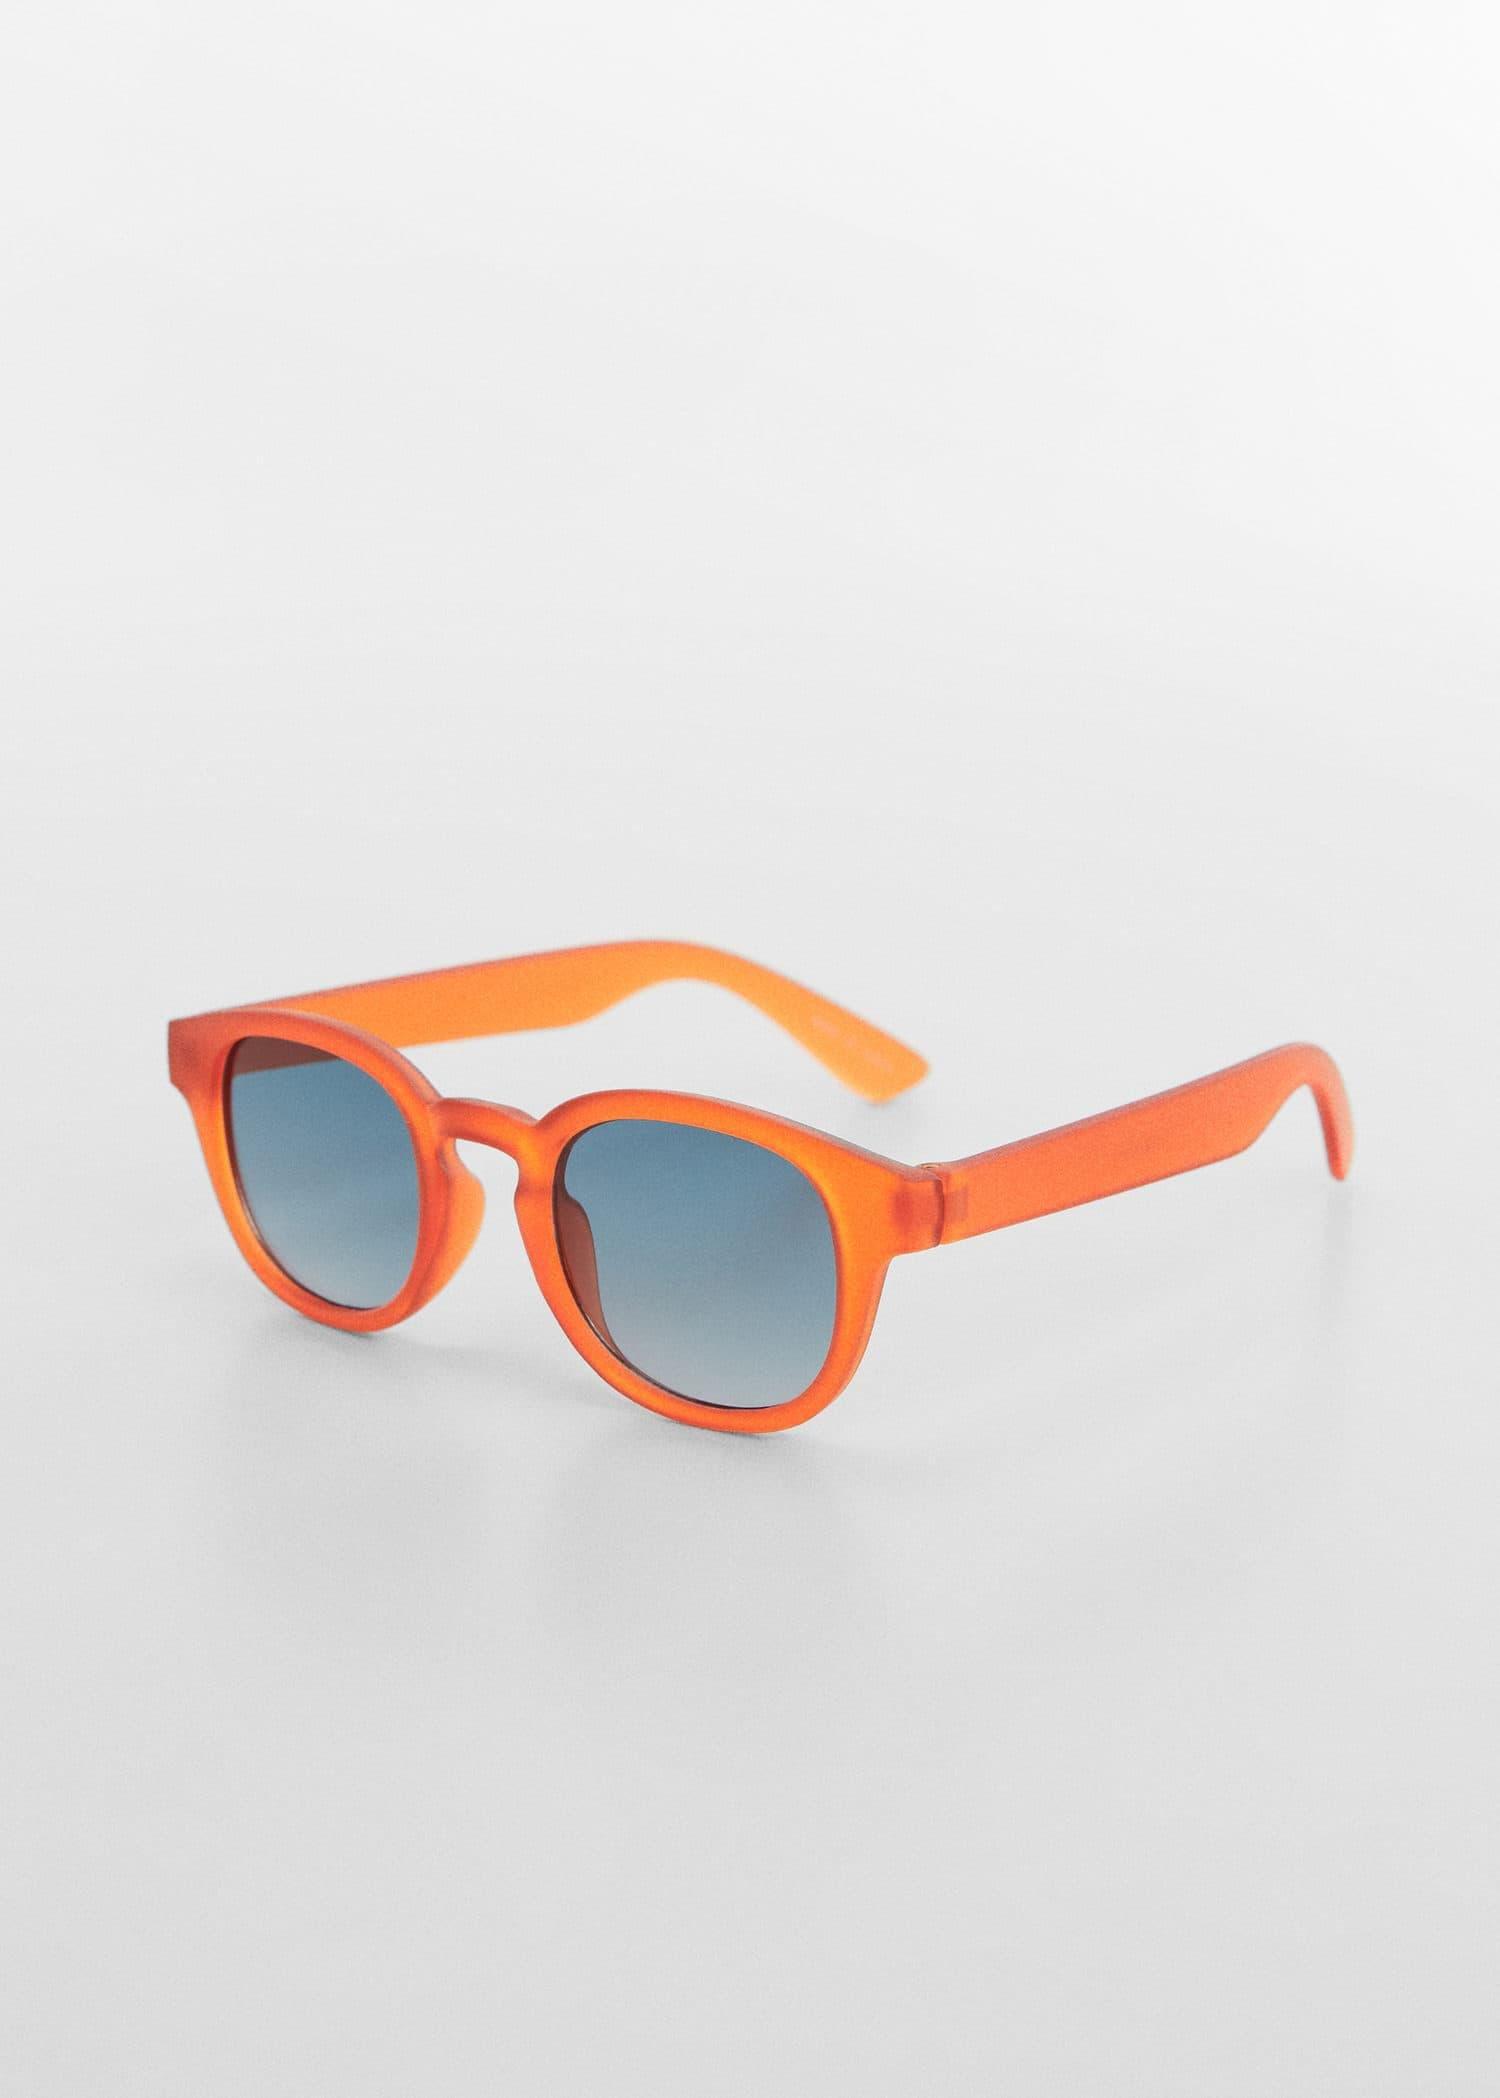 Mango - Brown Acetate Frame Sunglasses, Kids Boys